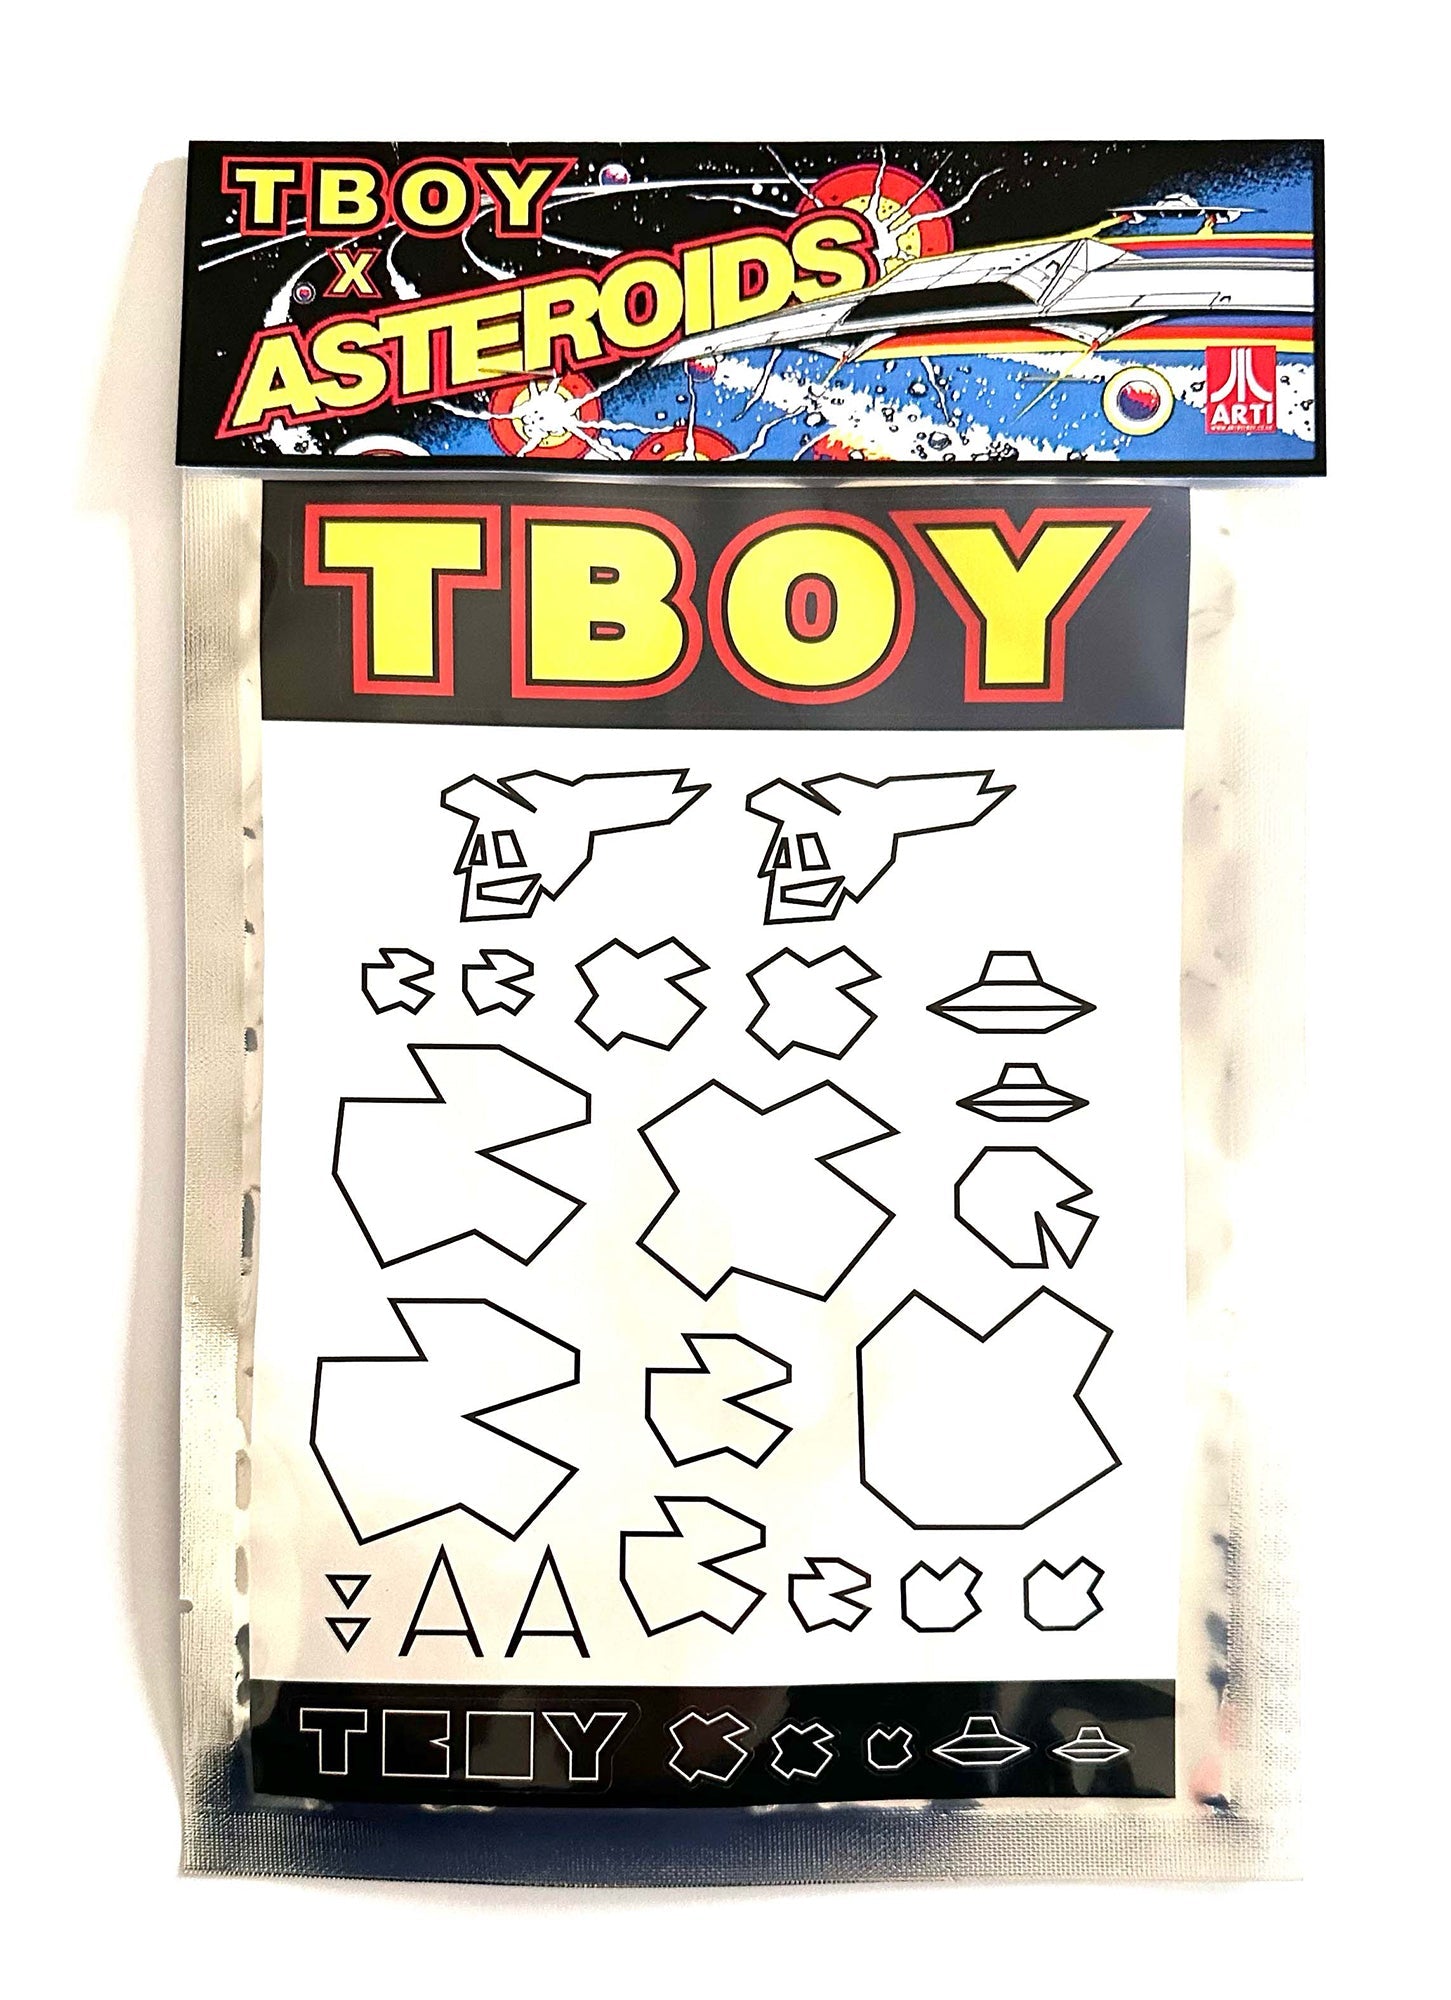 TBOY x ASTEROIDS sticker pack - Smolensky Gallery